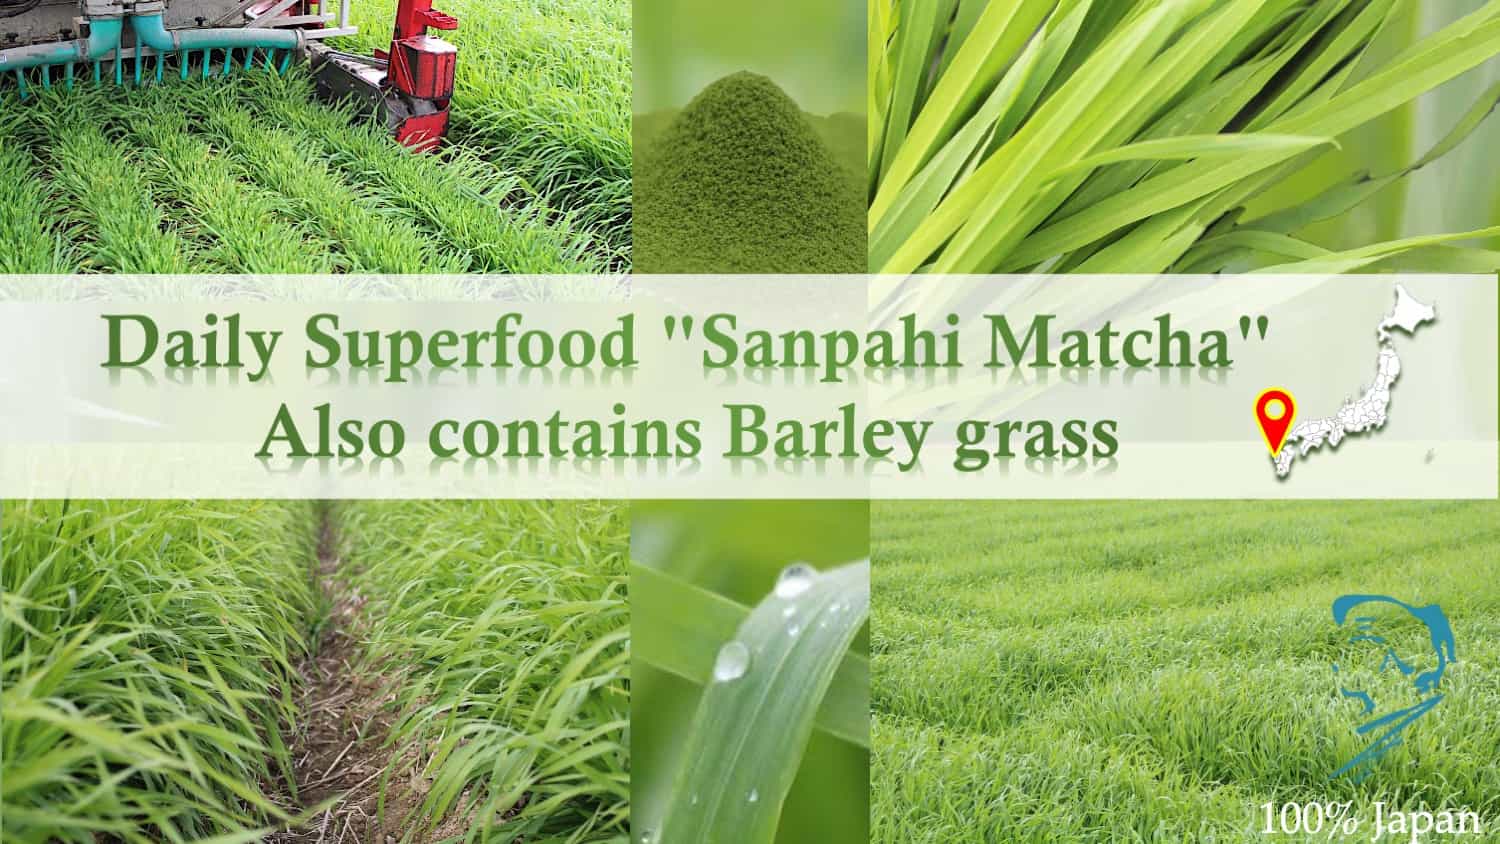 High Quality Genuine Authentic Japanese Matcha Barley Grass Powder Sanpachi 38